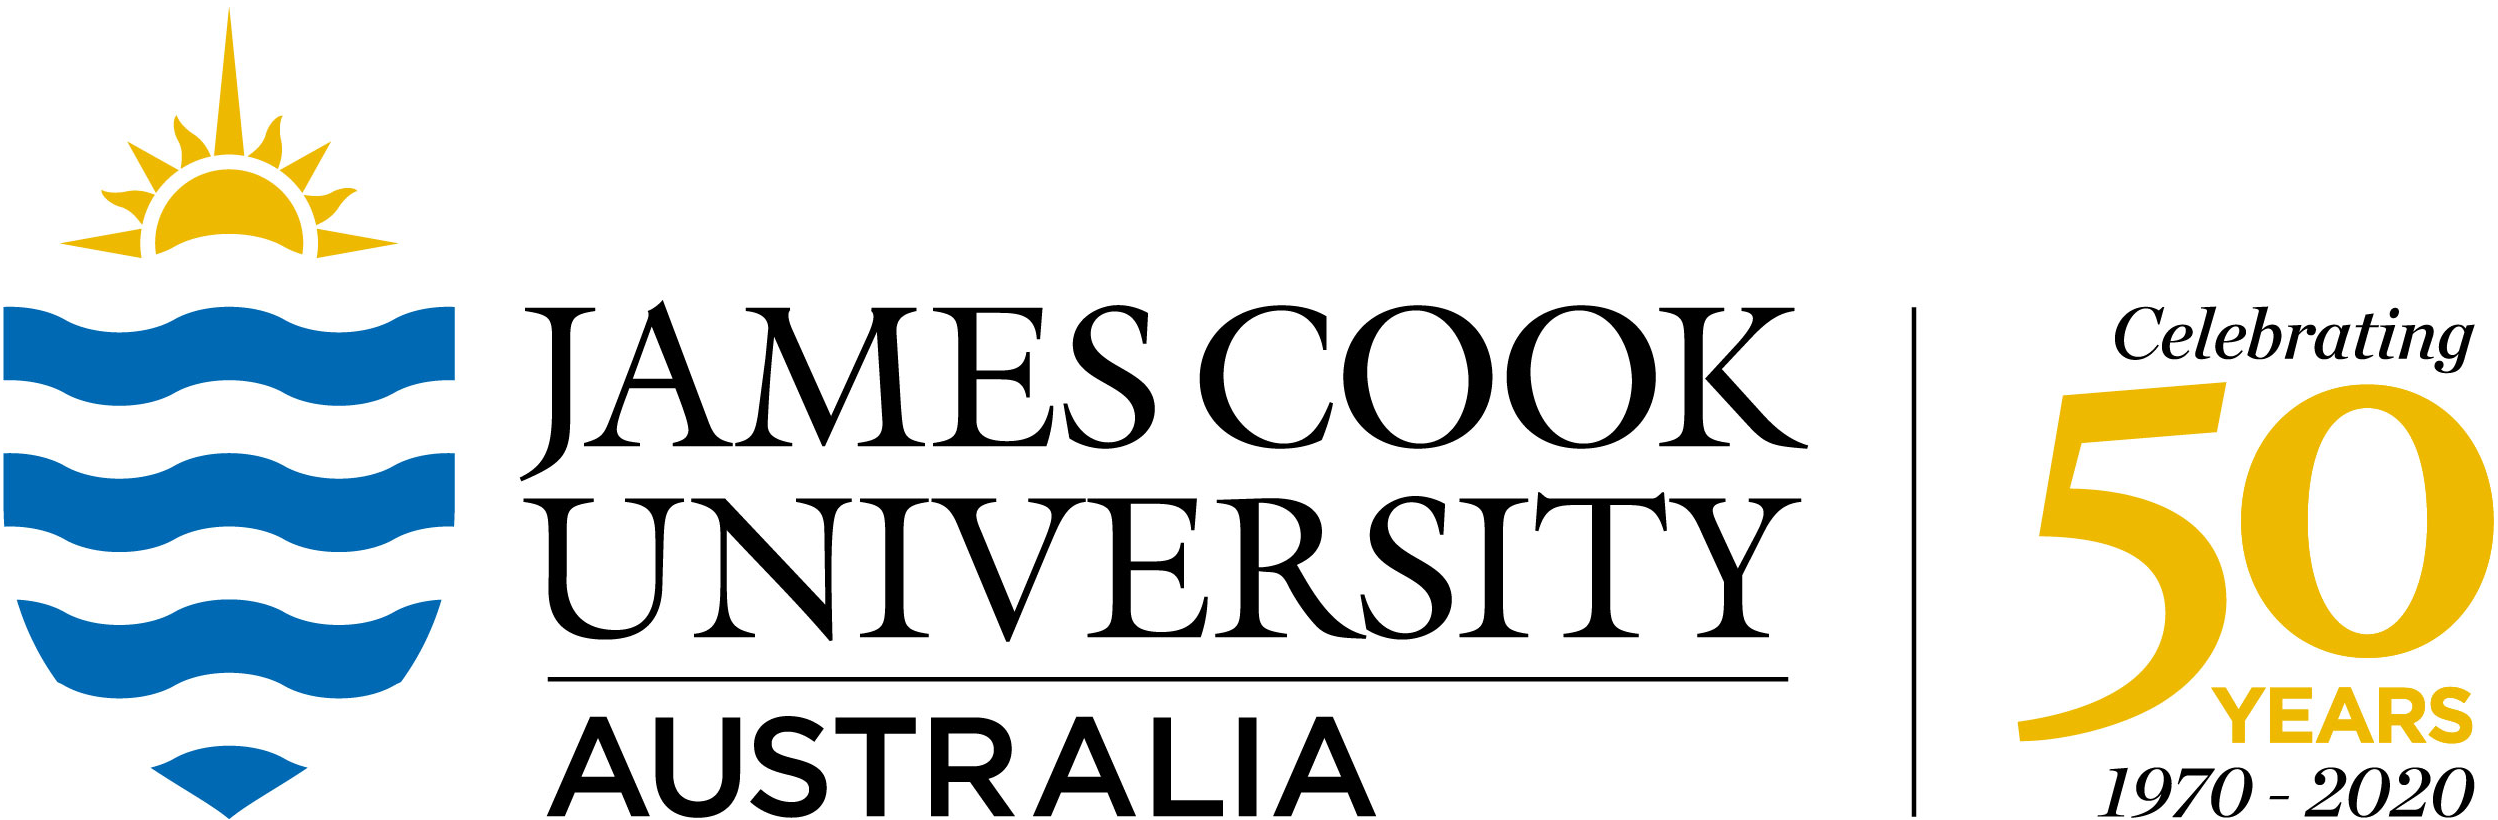 JCU Australia logo